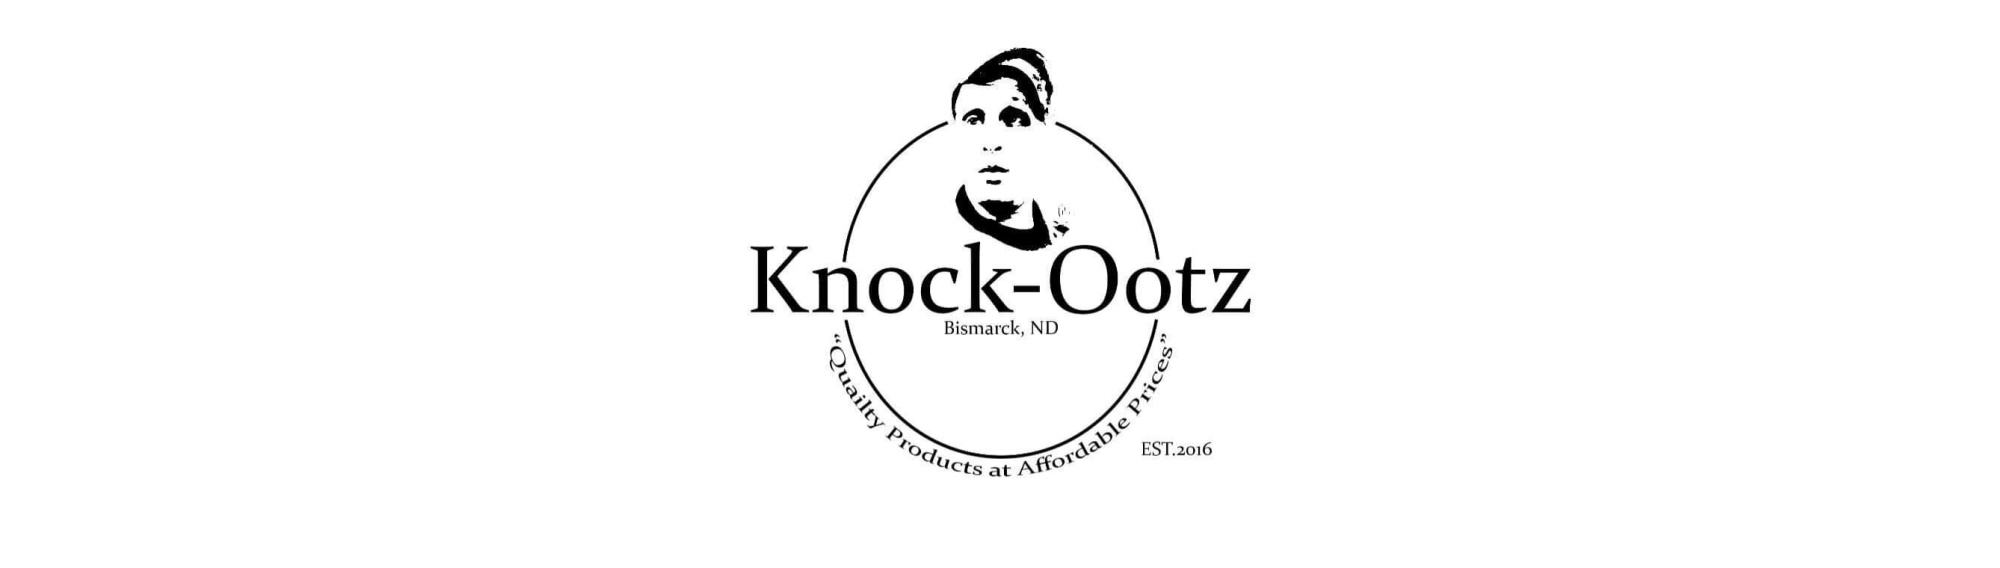 image of knock ootz in bismark nd